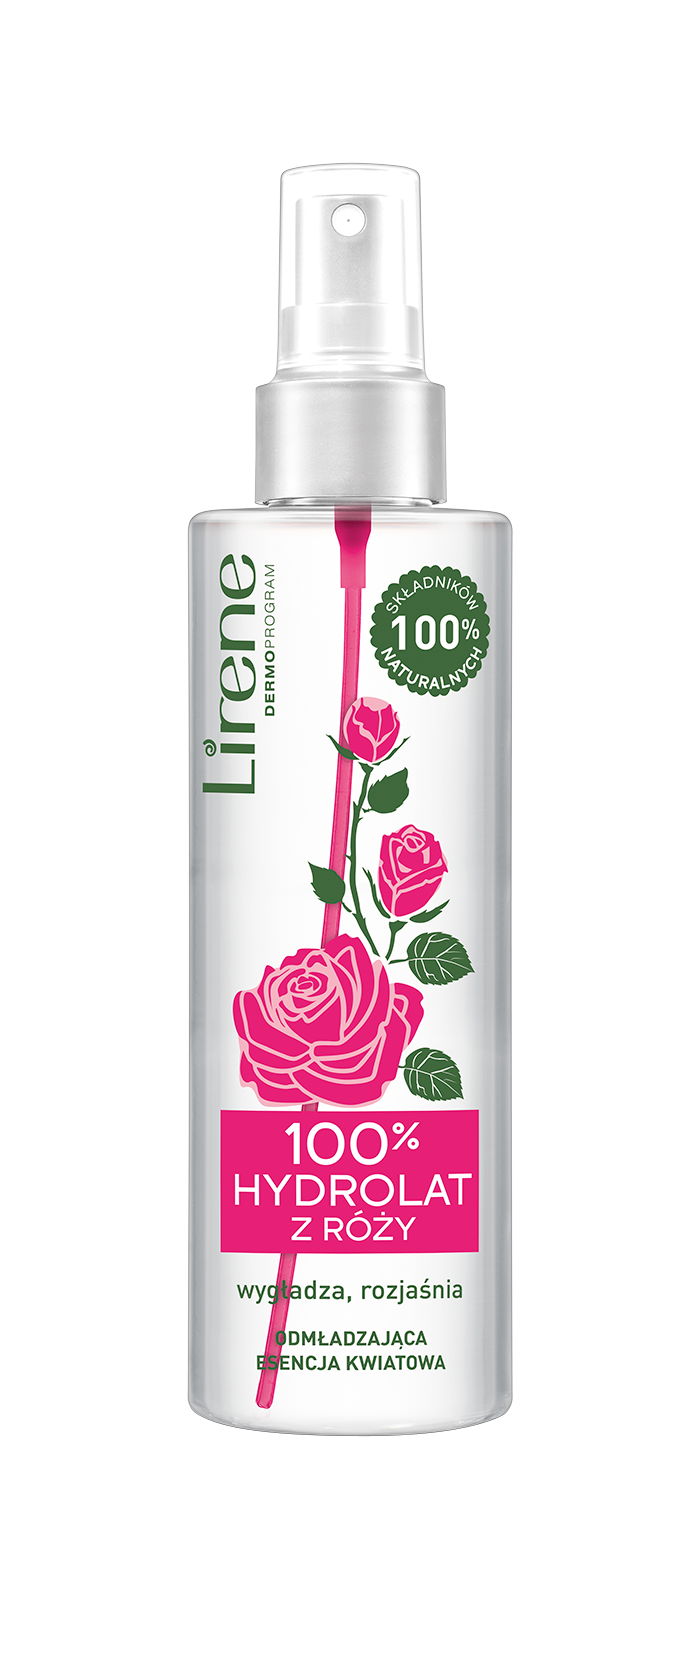 Lirene - Rose Hydrolate Eau Florale Spray | MazenOnline